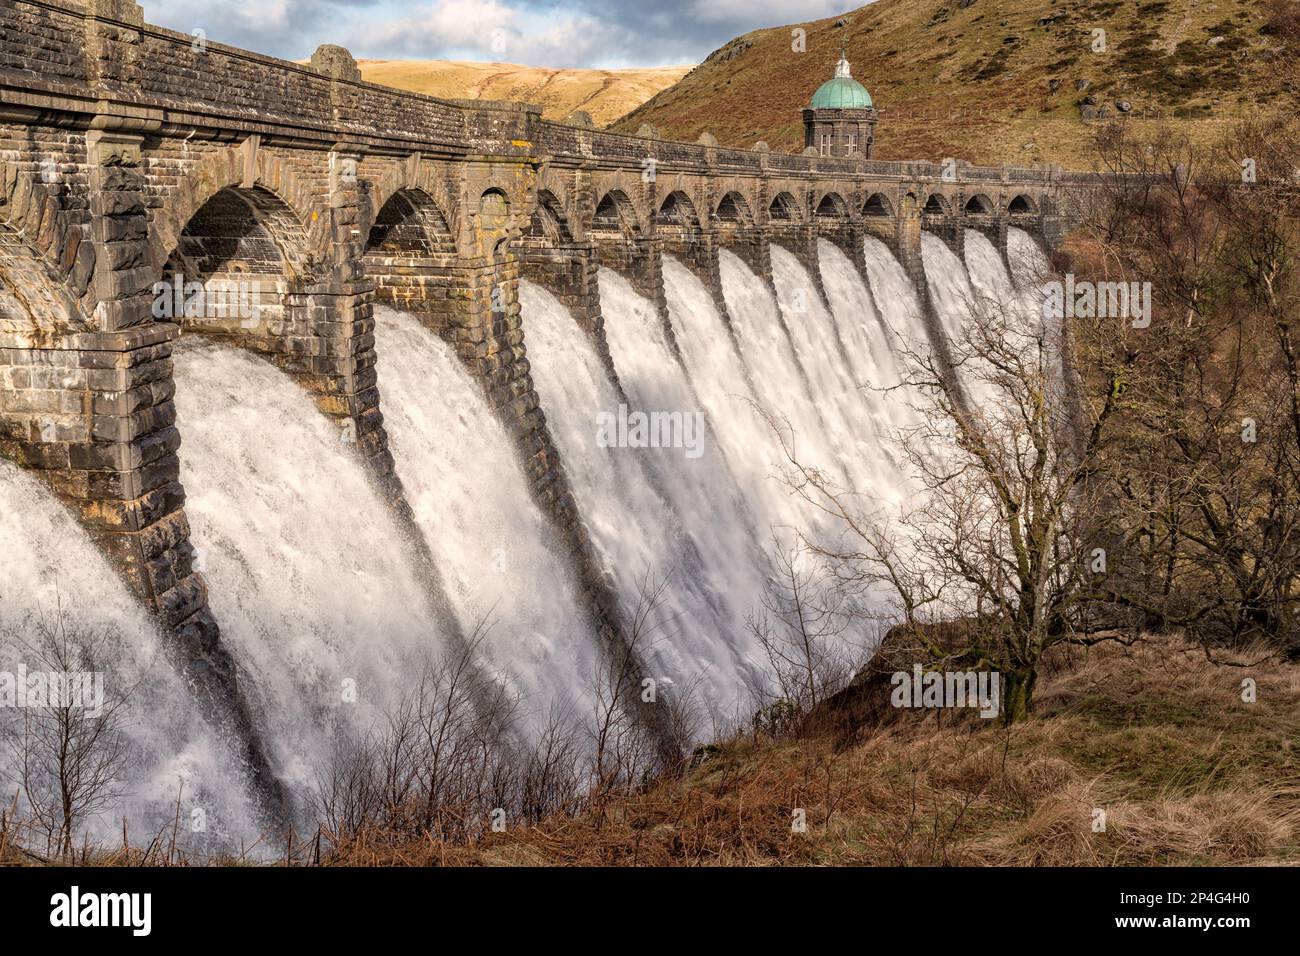 Vue sur le barrage, le barrage Craig Goch, la rivière Elan, la vallée Elan, Rhayader, Powys, Mid Wales, Royaume-Uni Banque D'Images